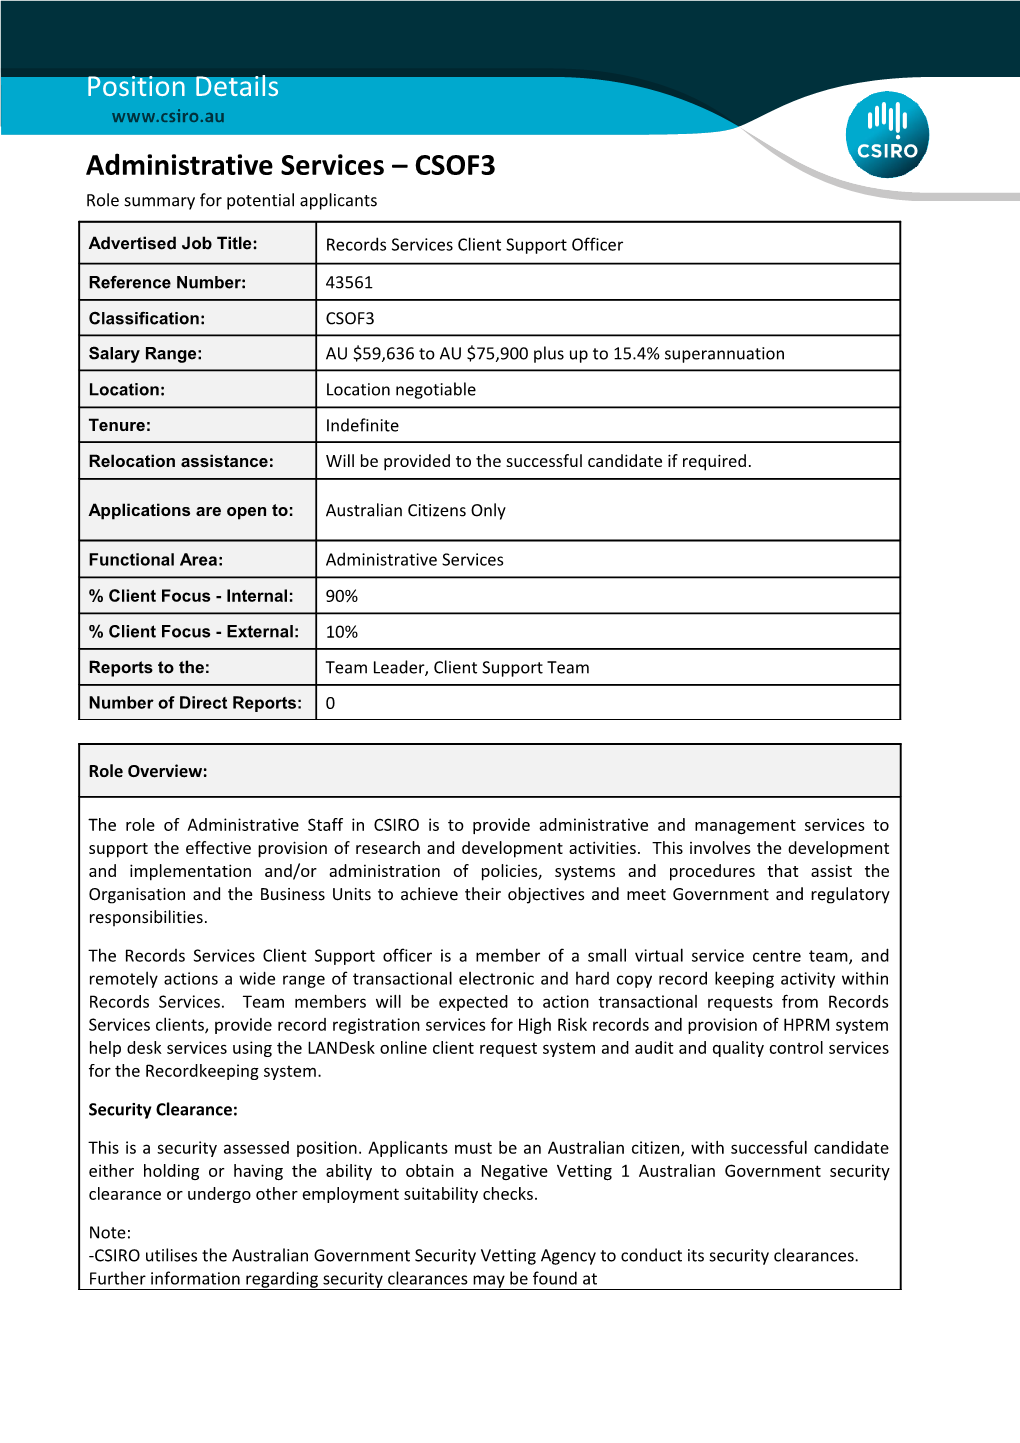 Position Details - Administrative Services - CSOF3